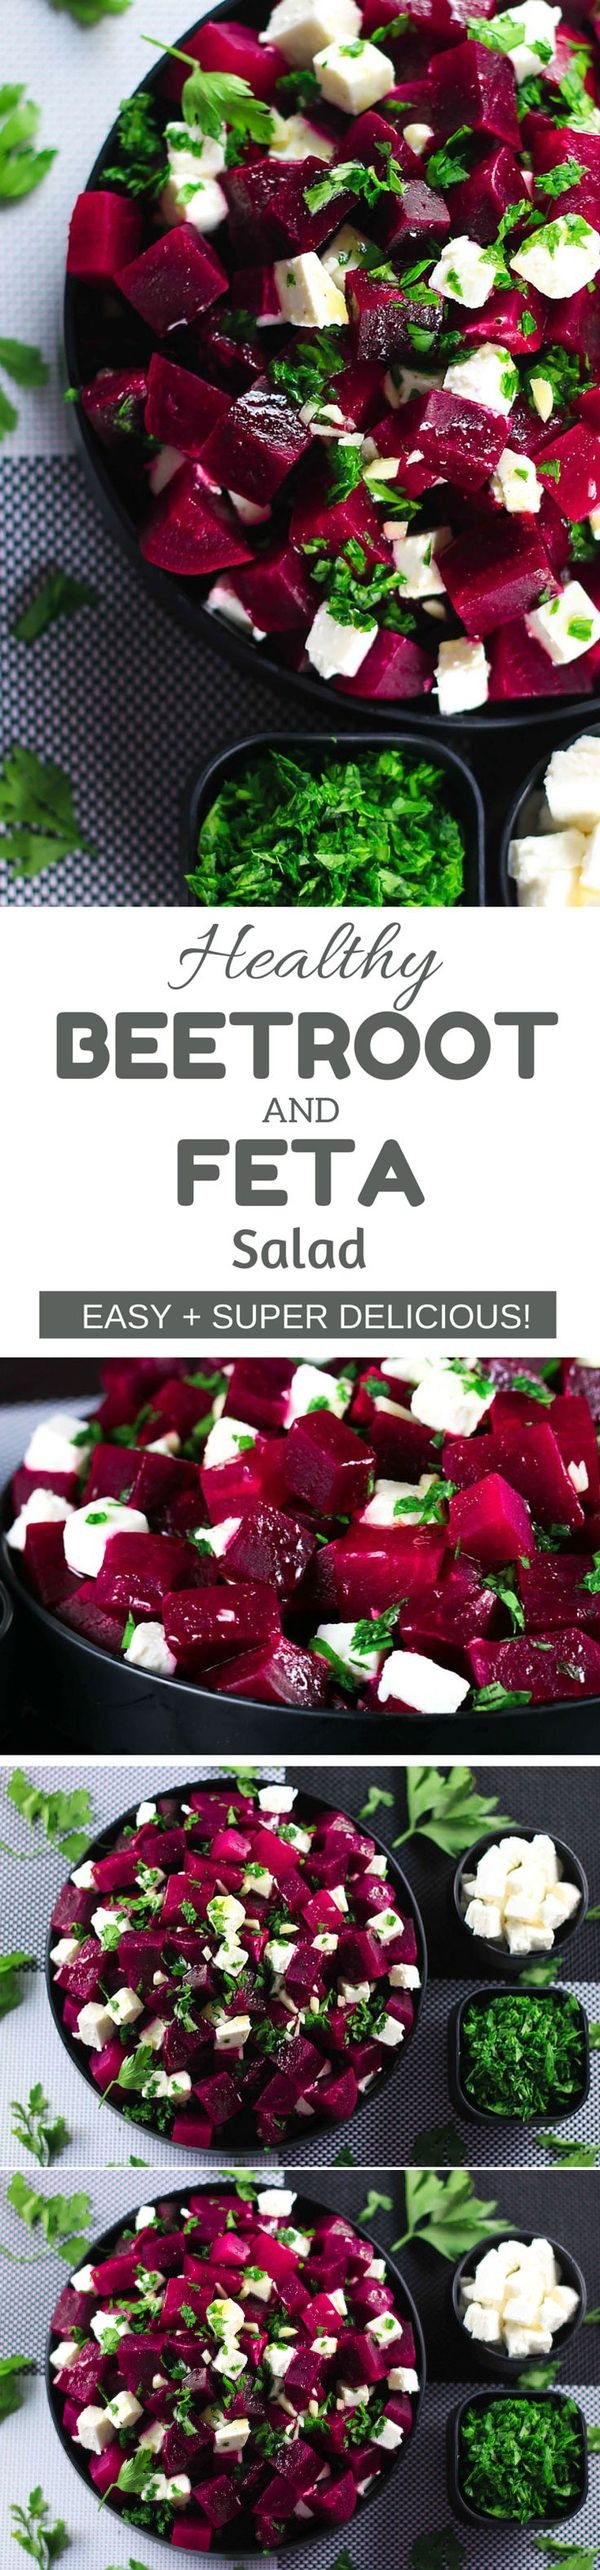 Beetroot and Feta Cheese Salad